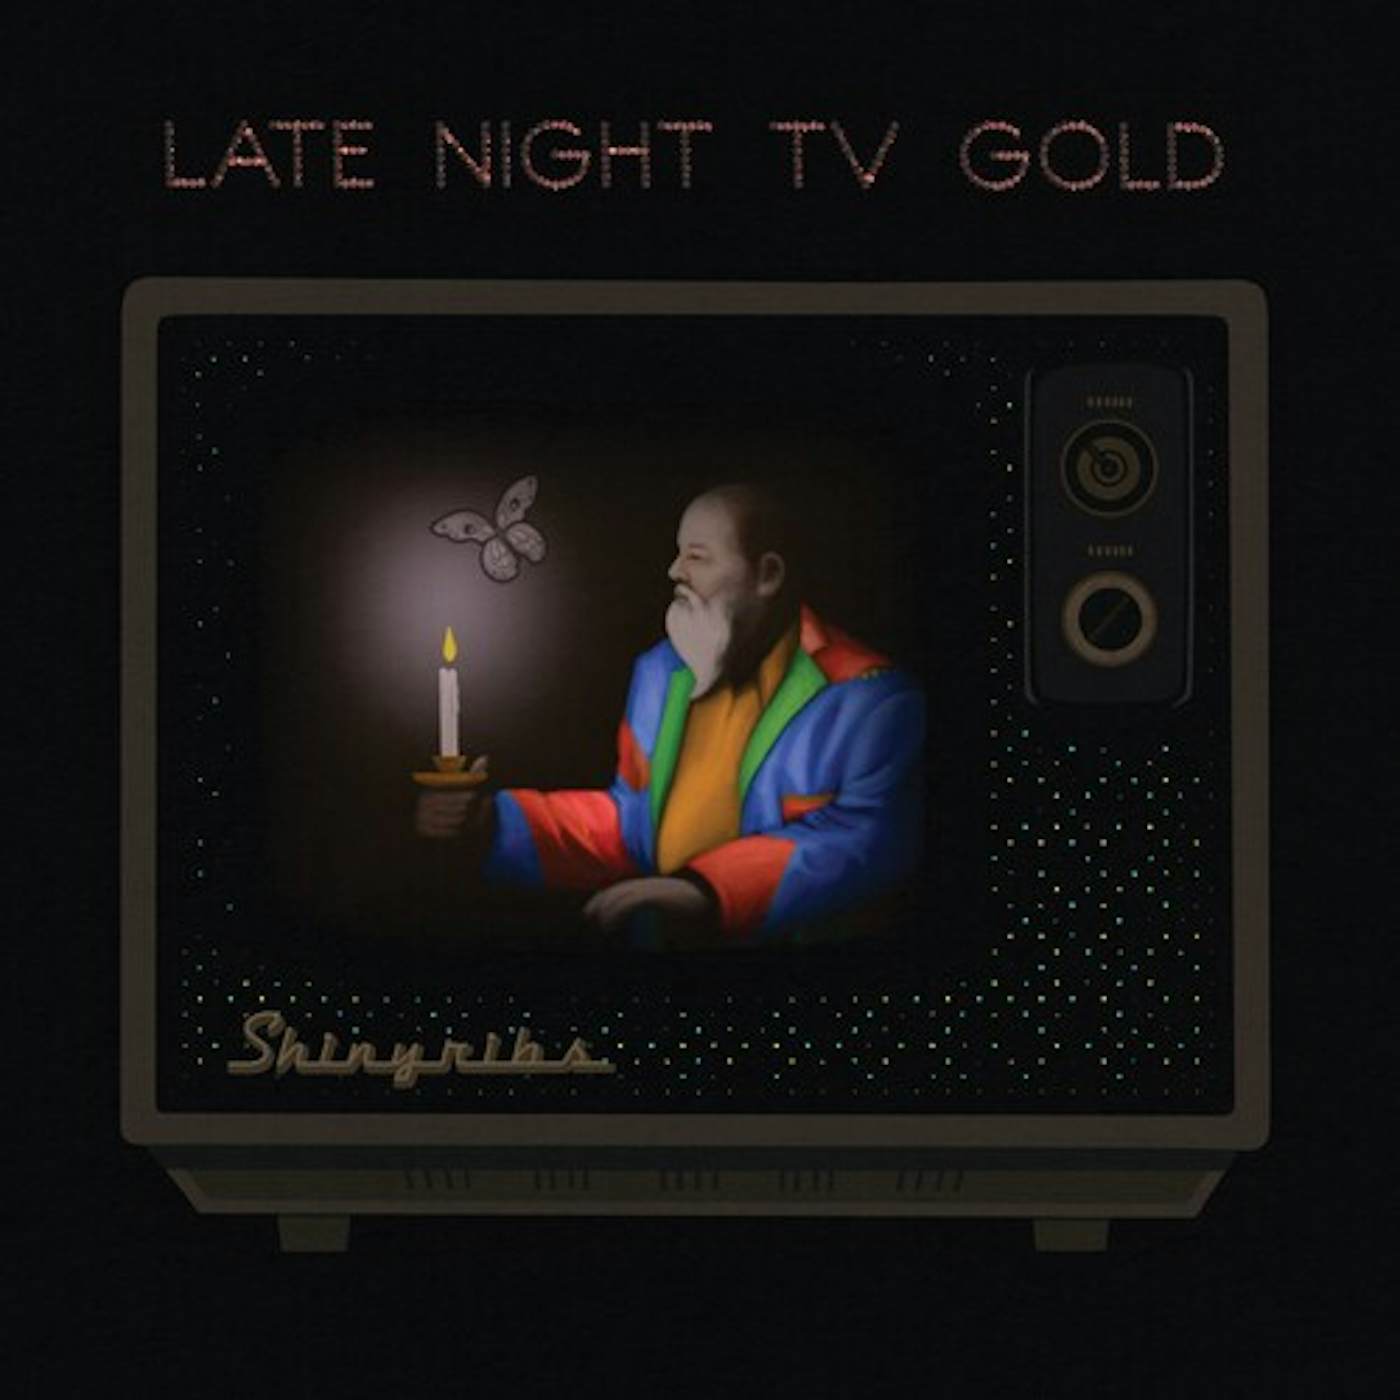 Shinyribs LATE NIGHT TV GOLD CD